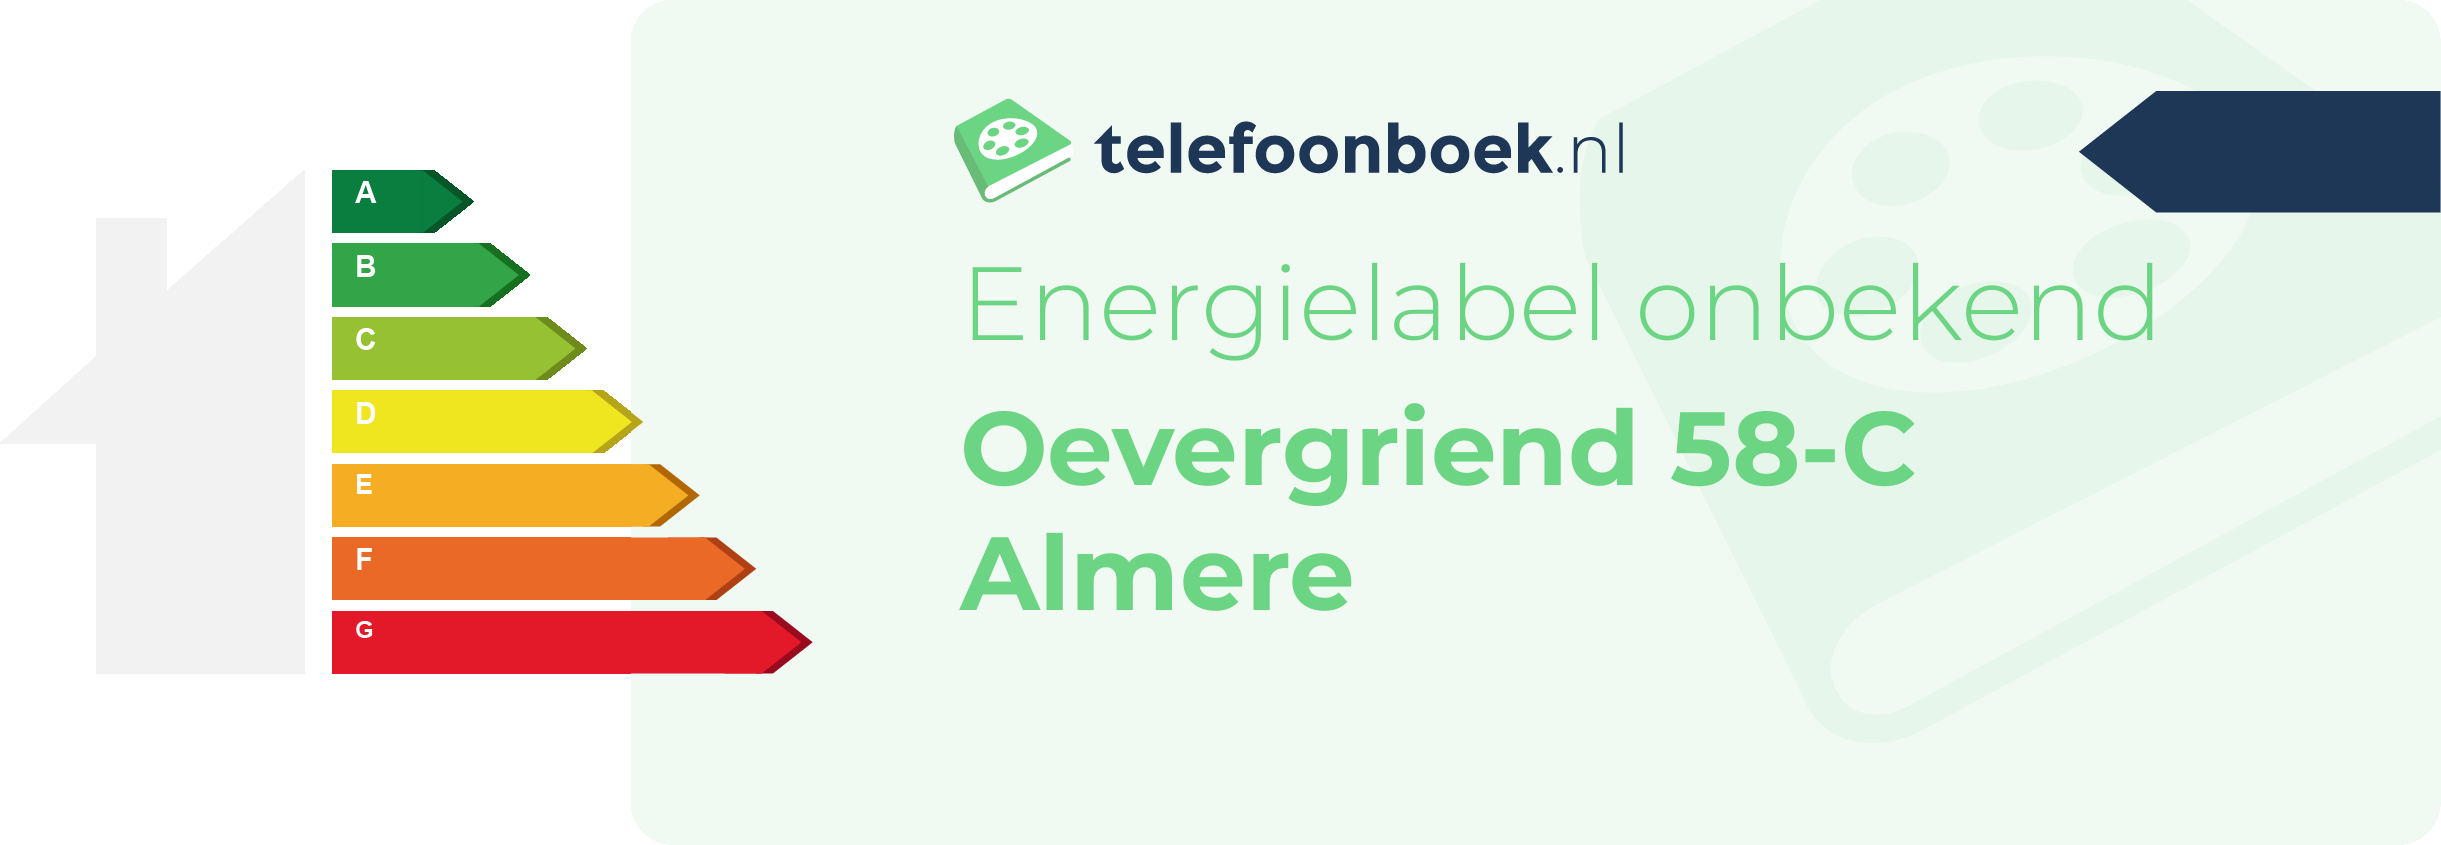 Energielabel Oevergriend 58-C Almere